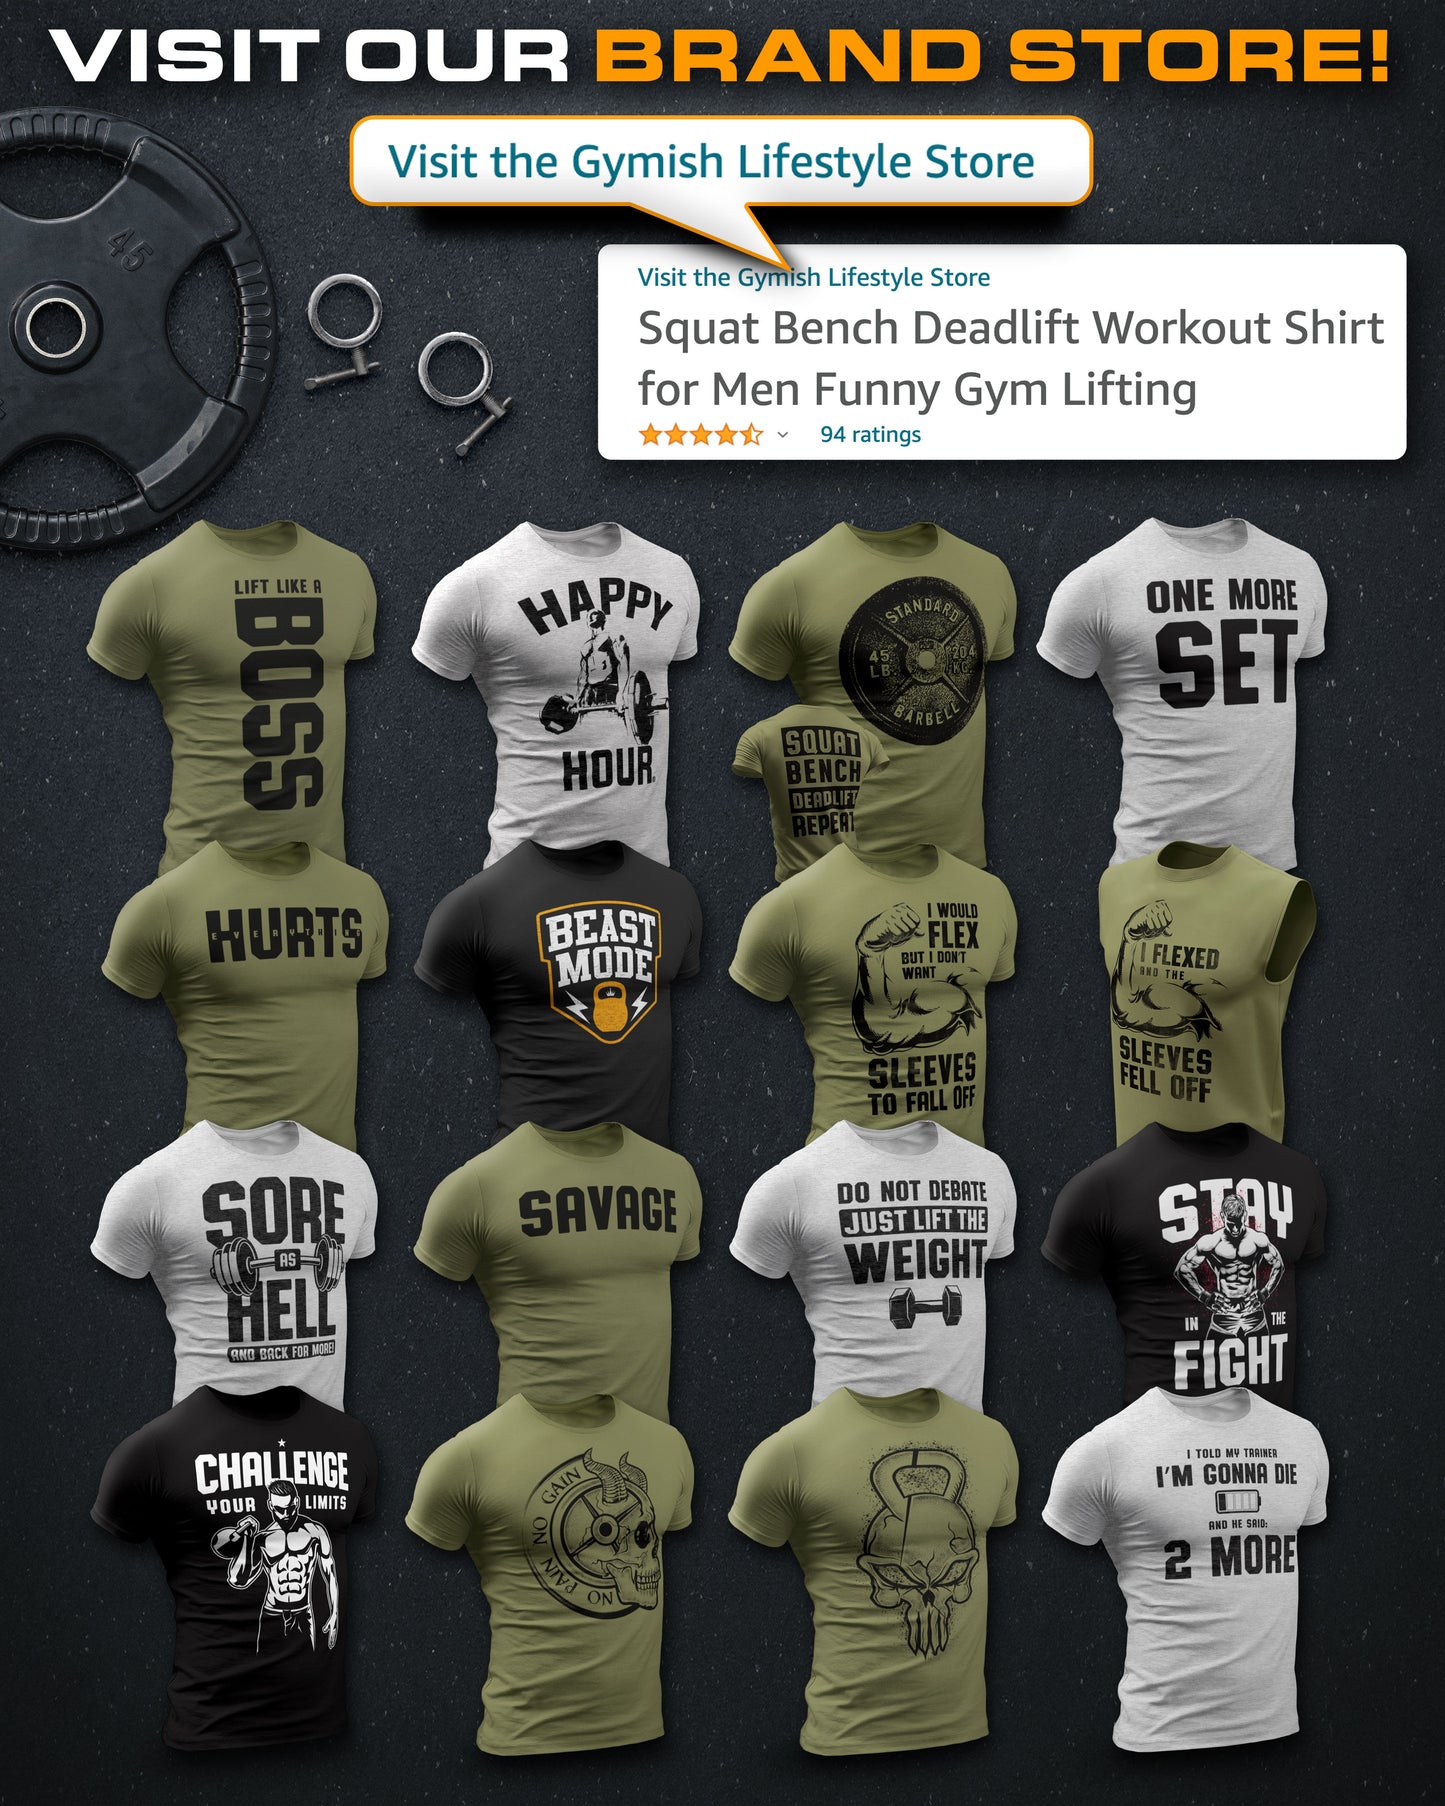 23- RAGLAN Deadlifts? Heck Yes! Workout Gym T-Shirt for Men